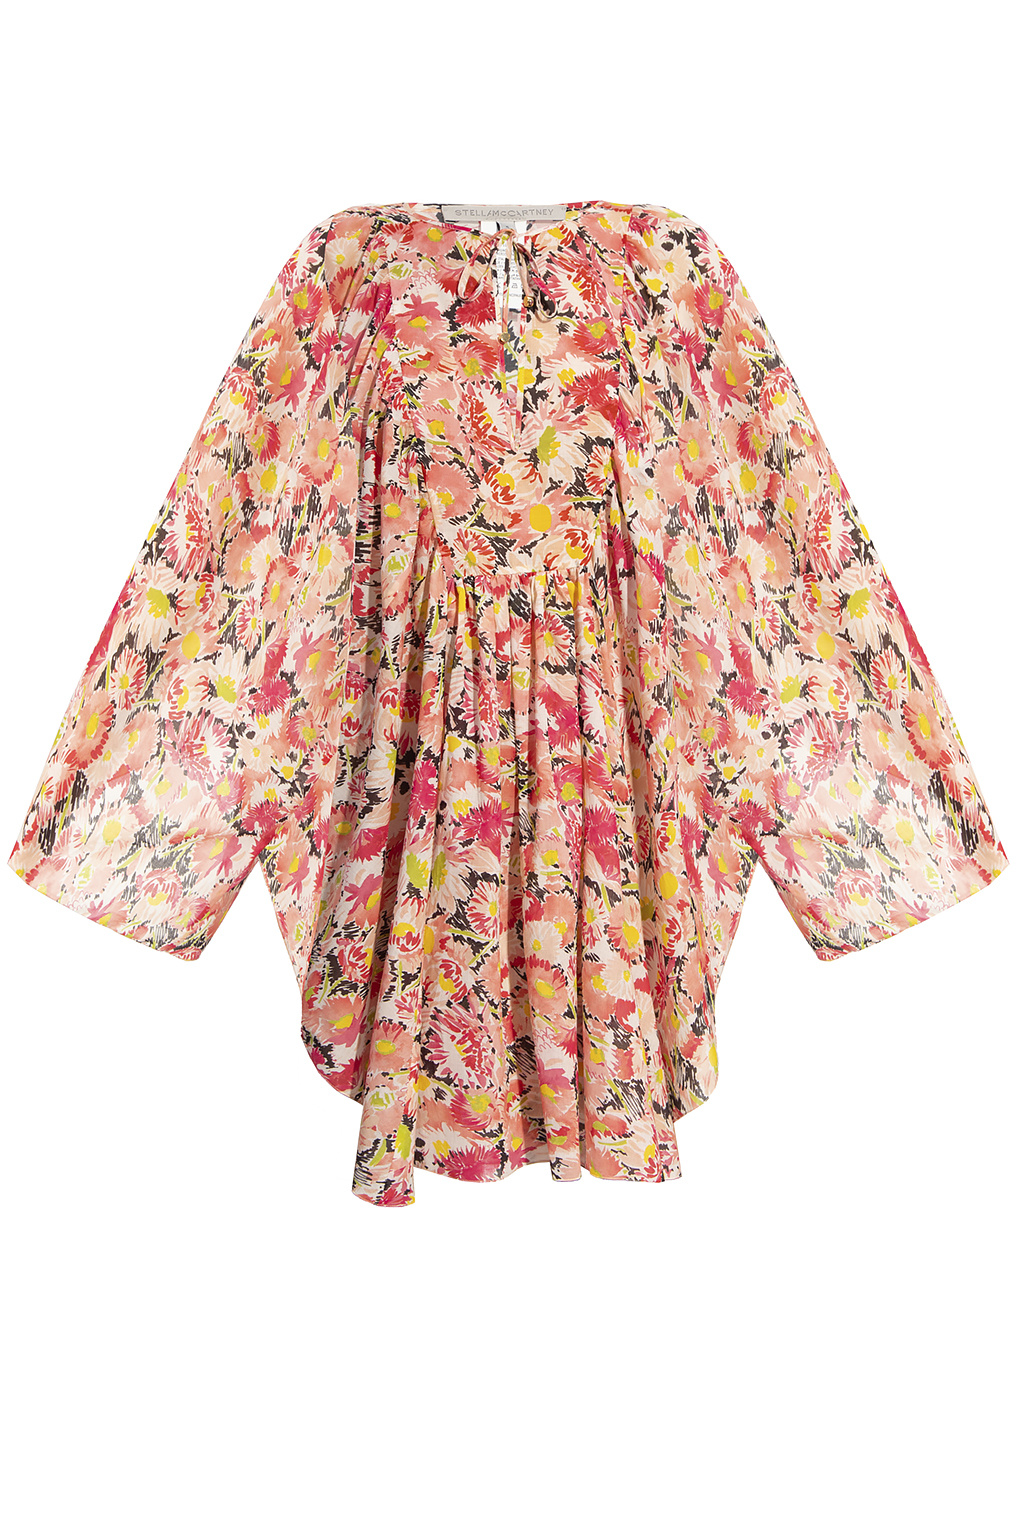 Stella McCartney ‘Watercolour Floral’ beach dress